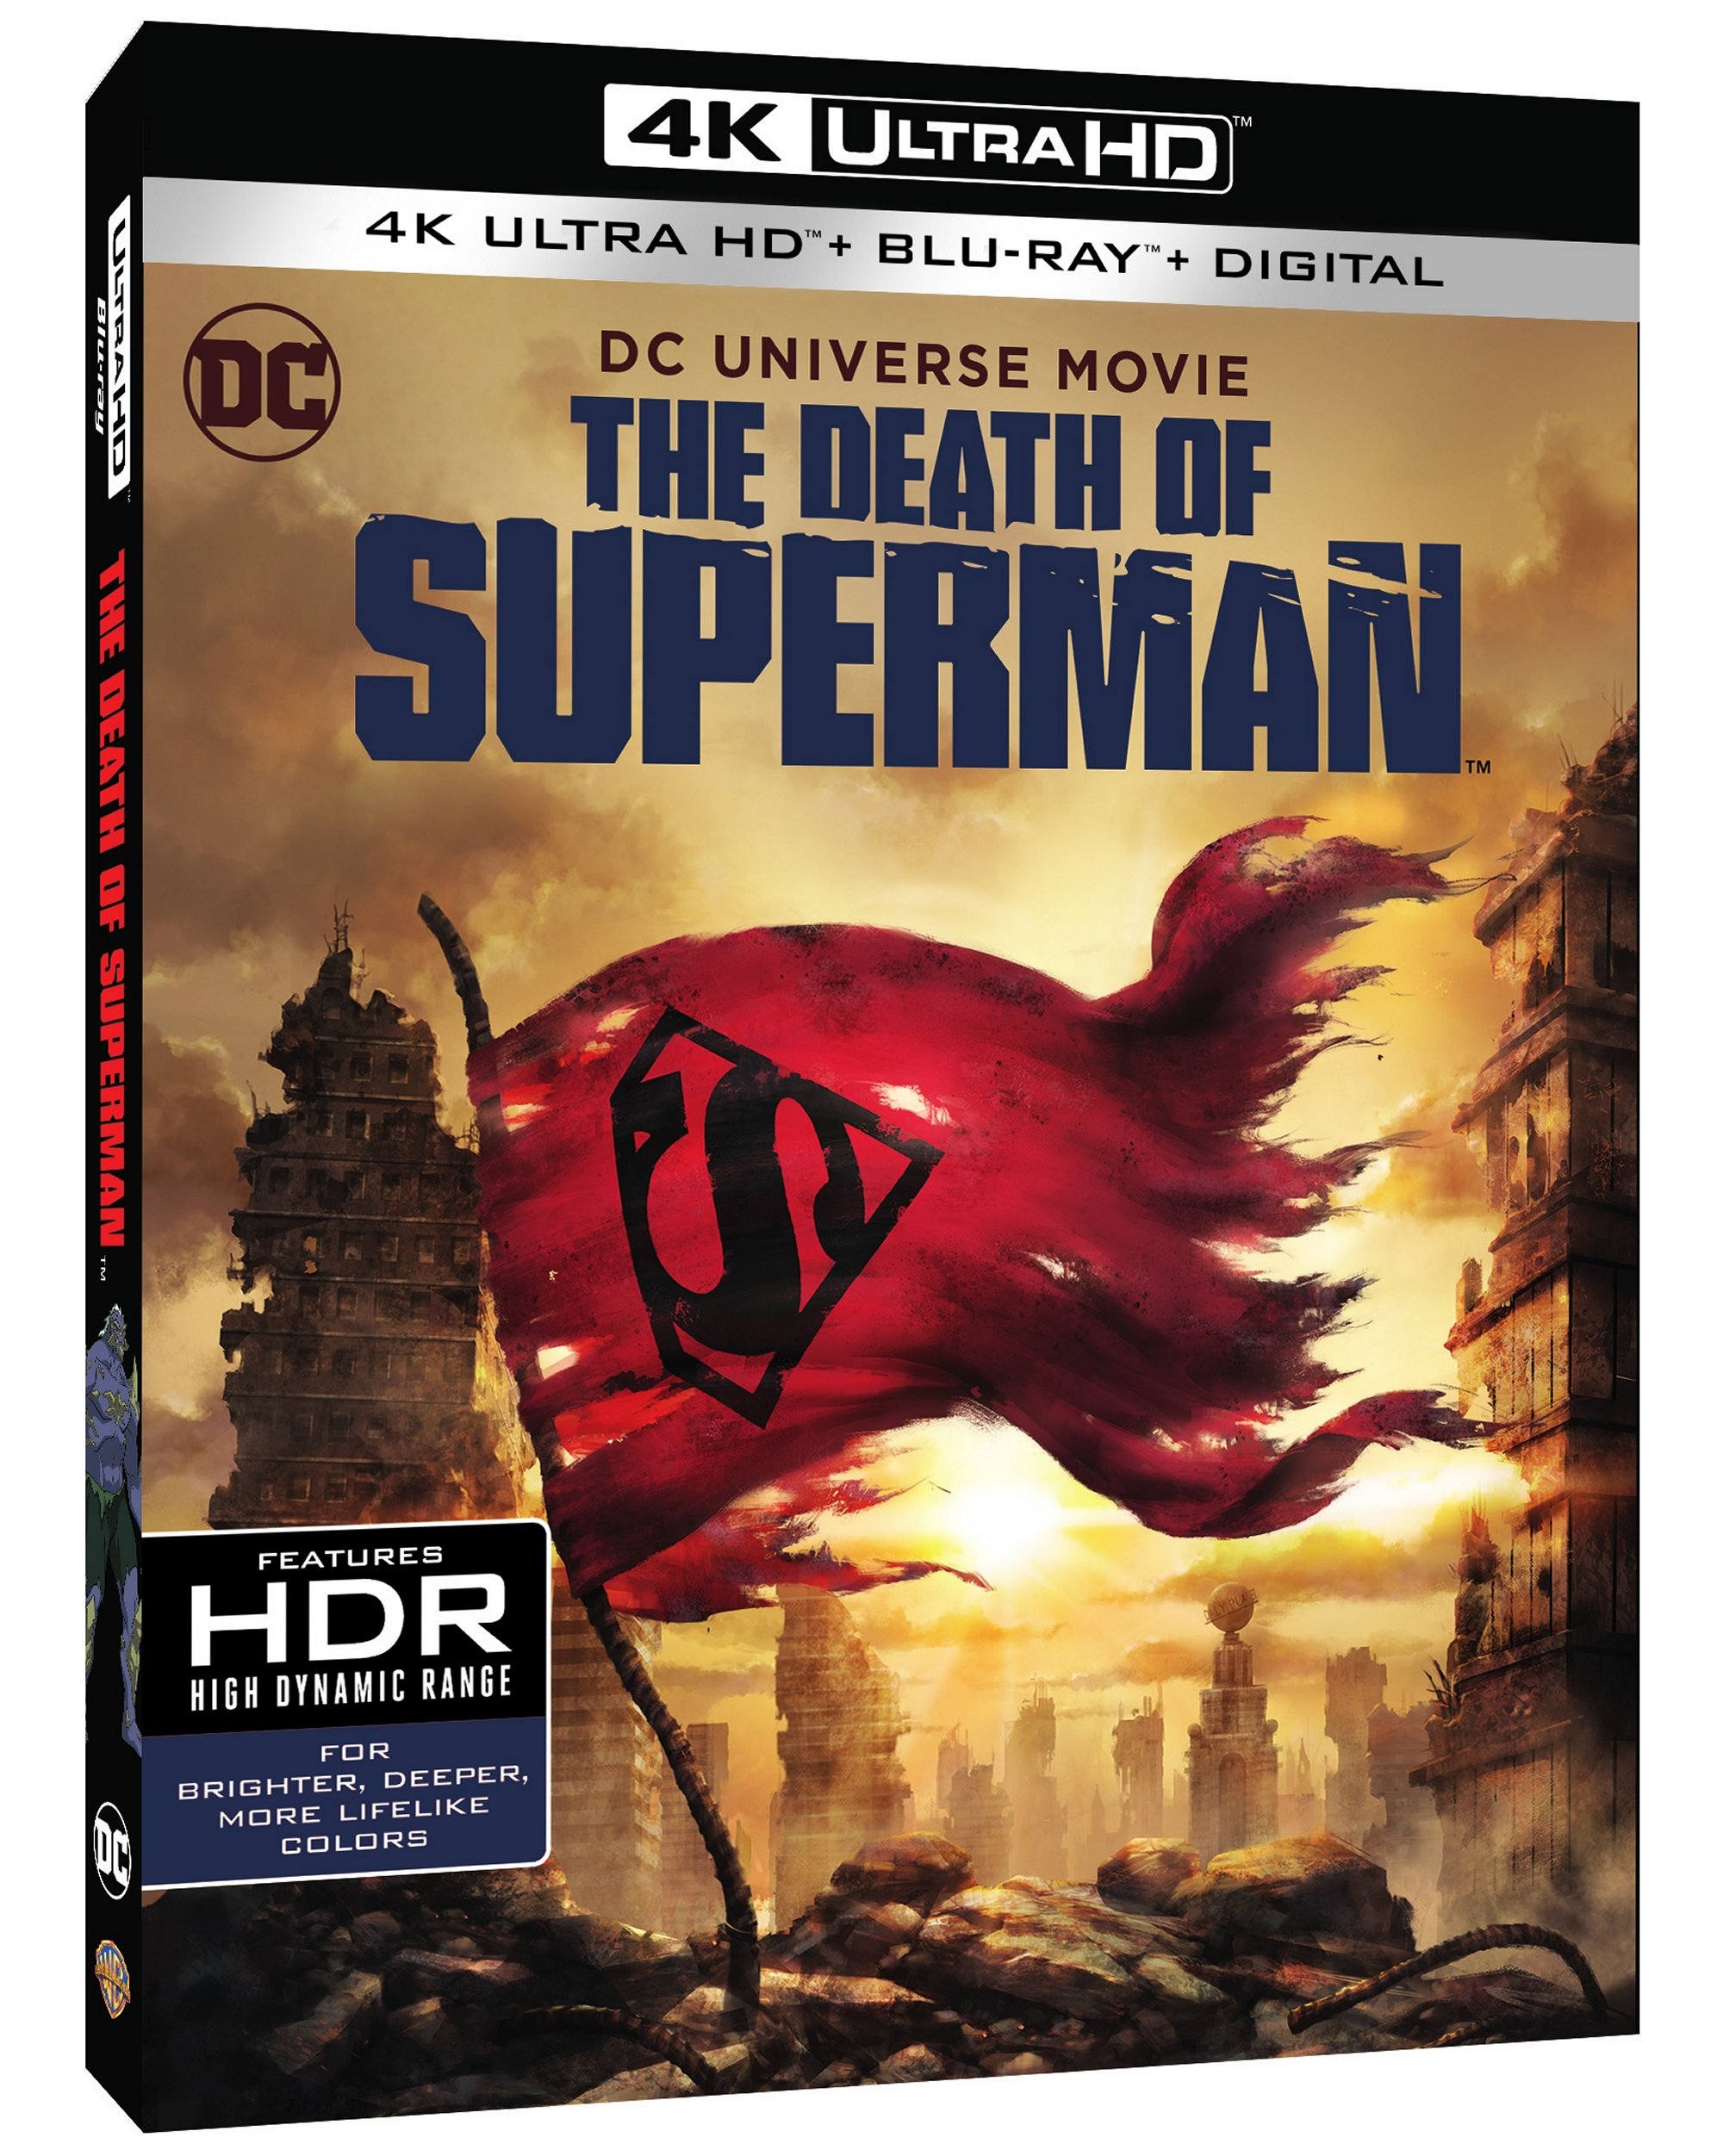 The Death of Superman 4K Ultra HD Blu-ray Digital DVD Warner Bros release